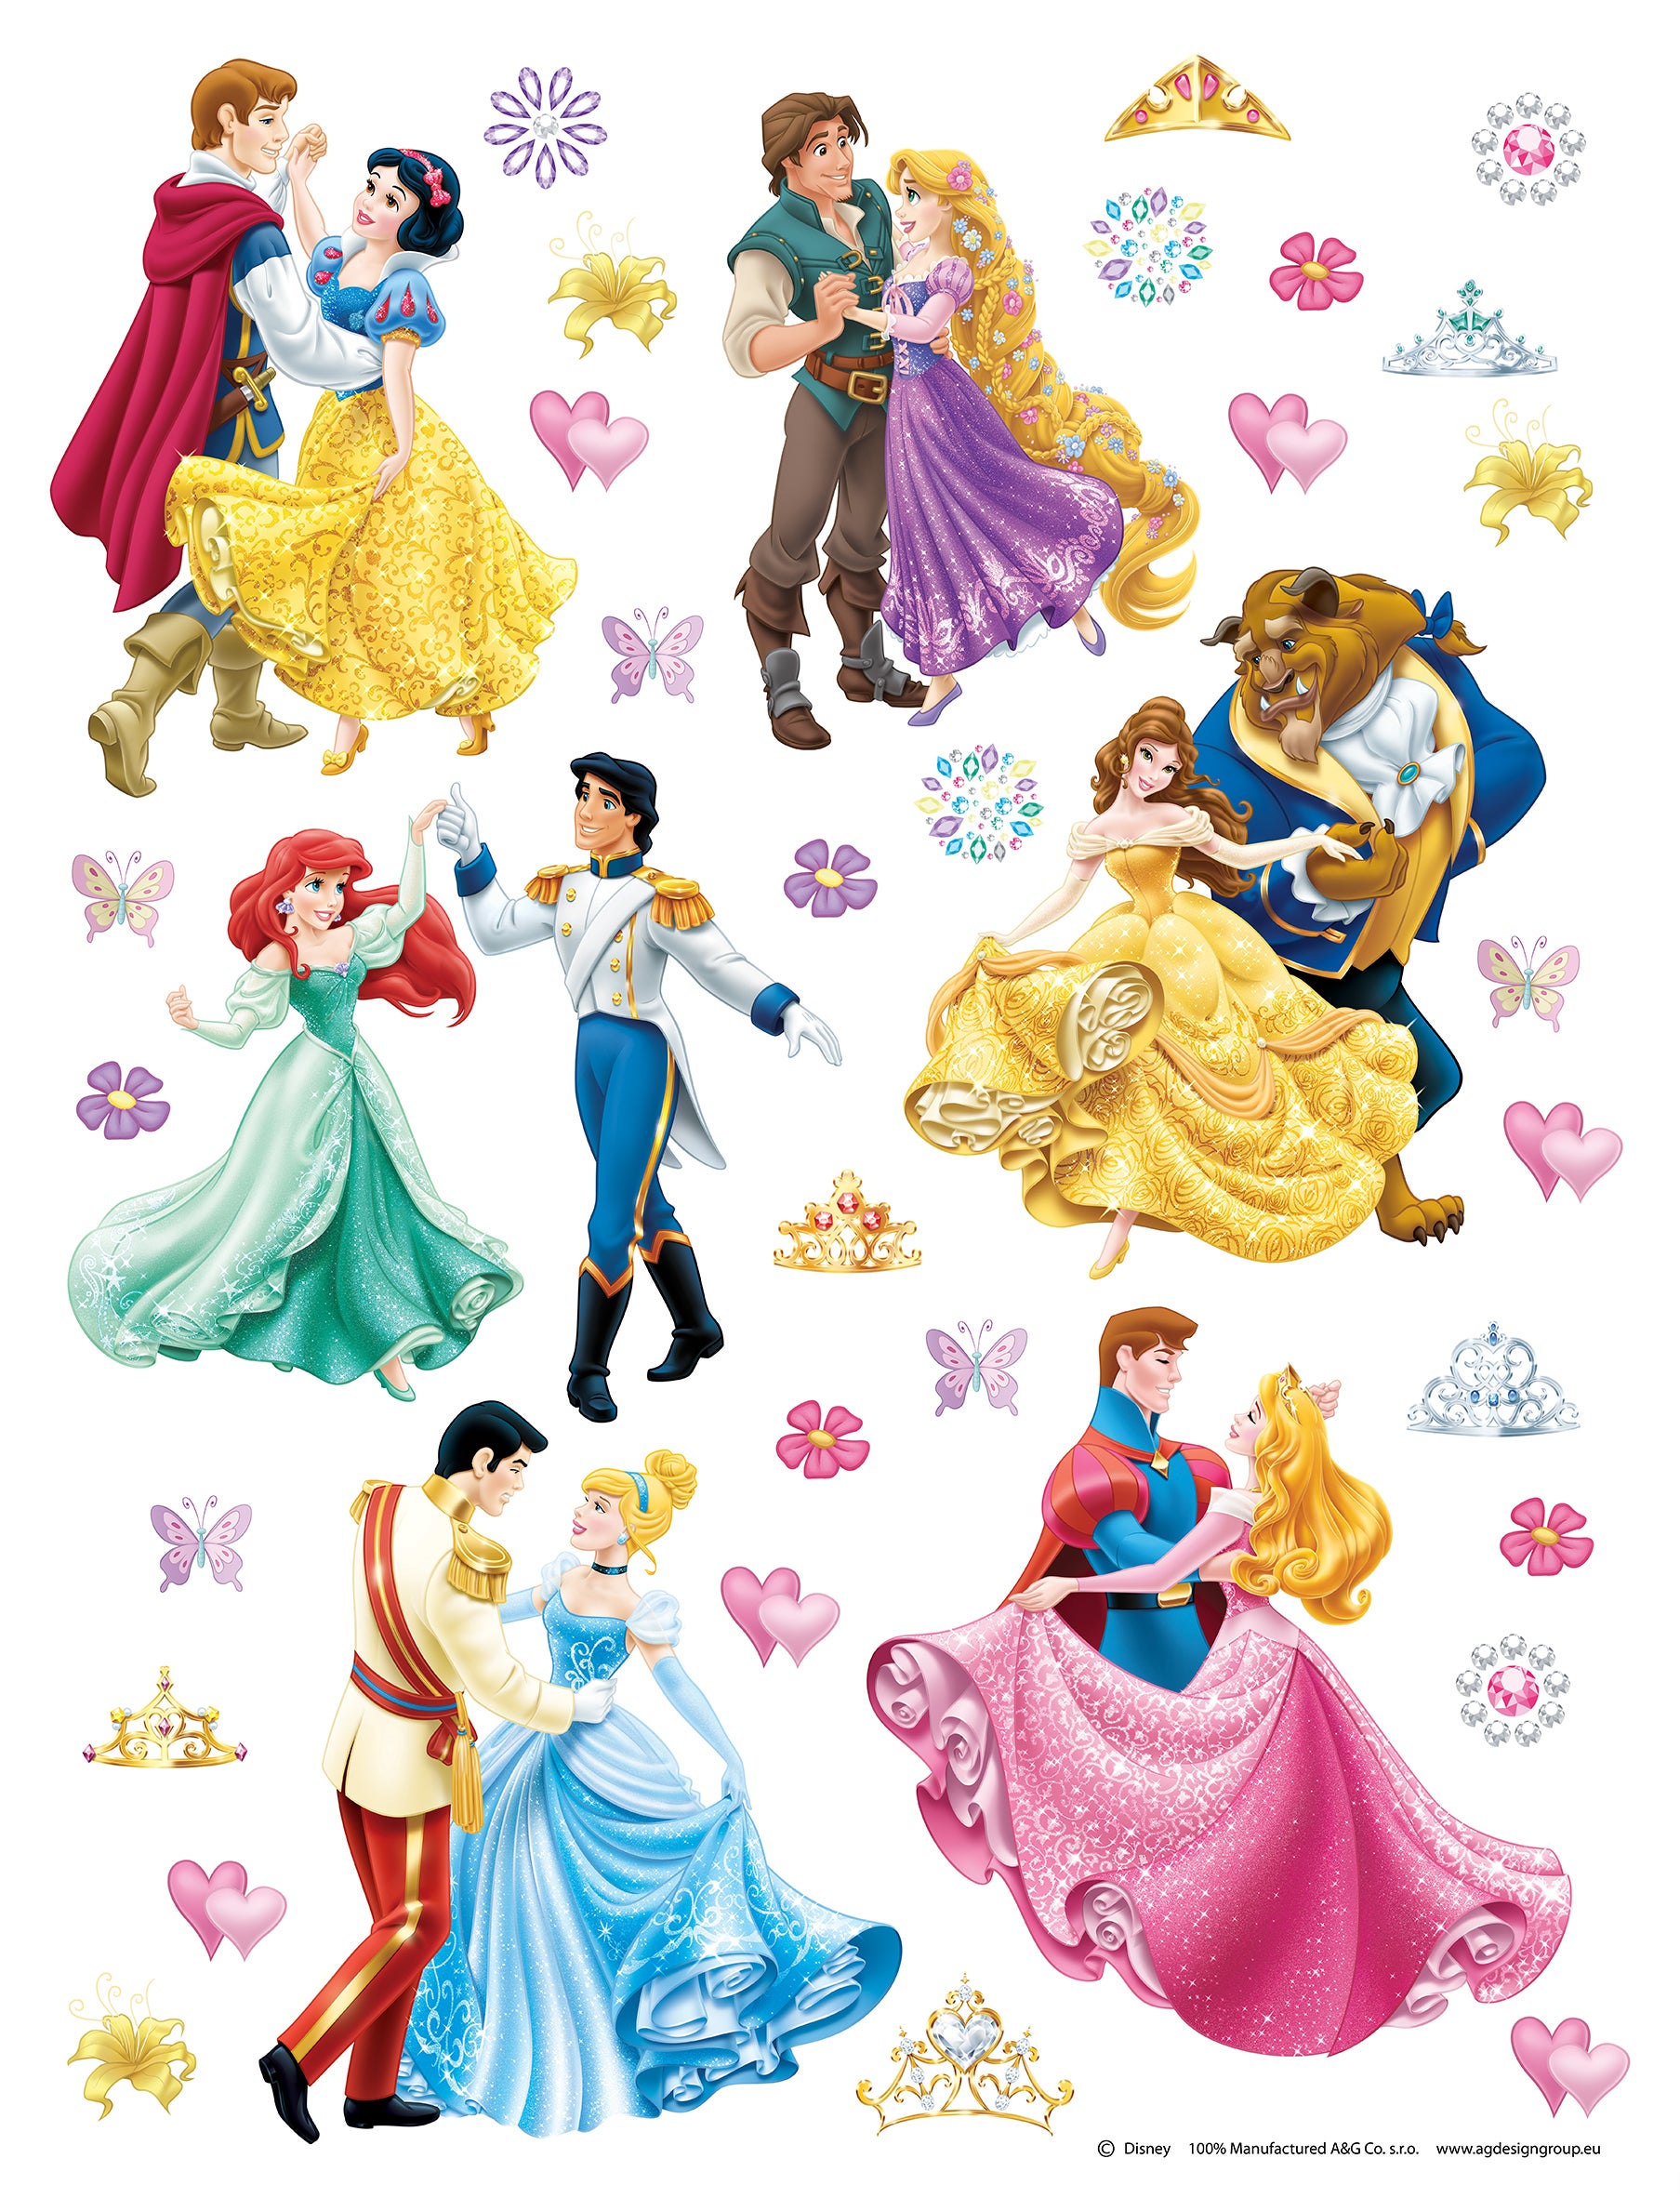 Adesivo da parete Principesse giallo, rosa, viola e blu - 65 x 85 cm -  Disney